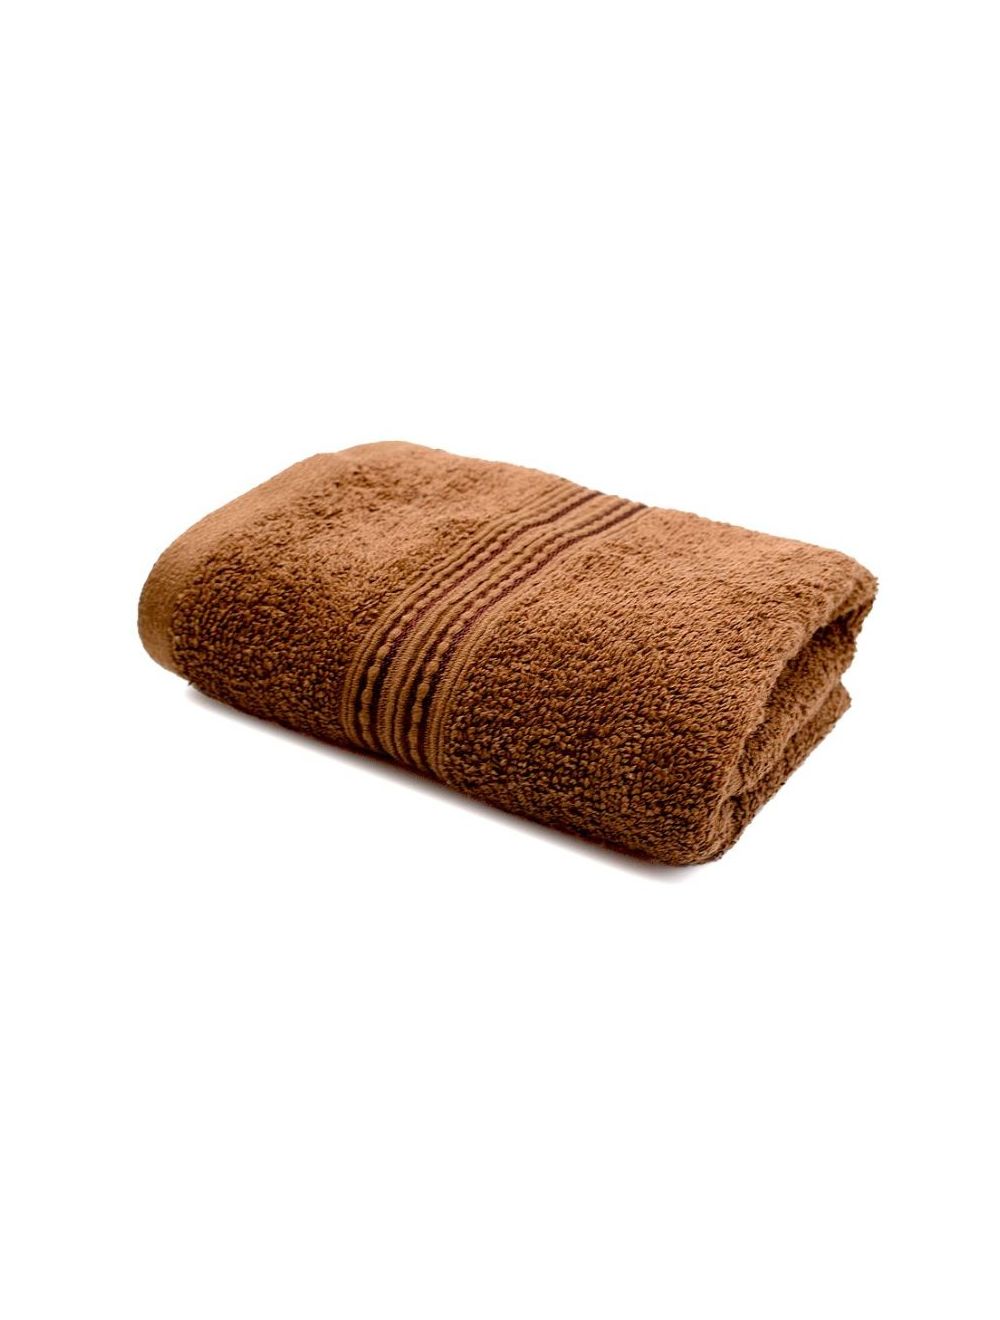 Rahalife 100% Cotton Hand Towel, Classic Collection, Brown   -14RLHT017